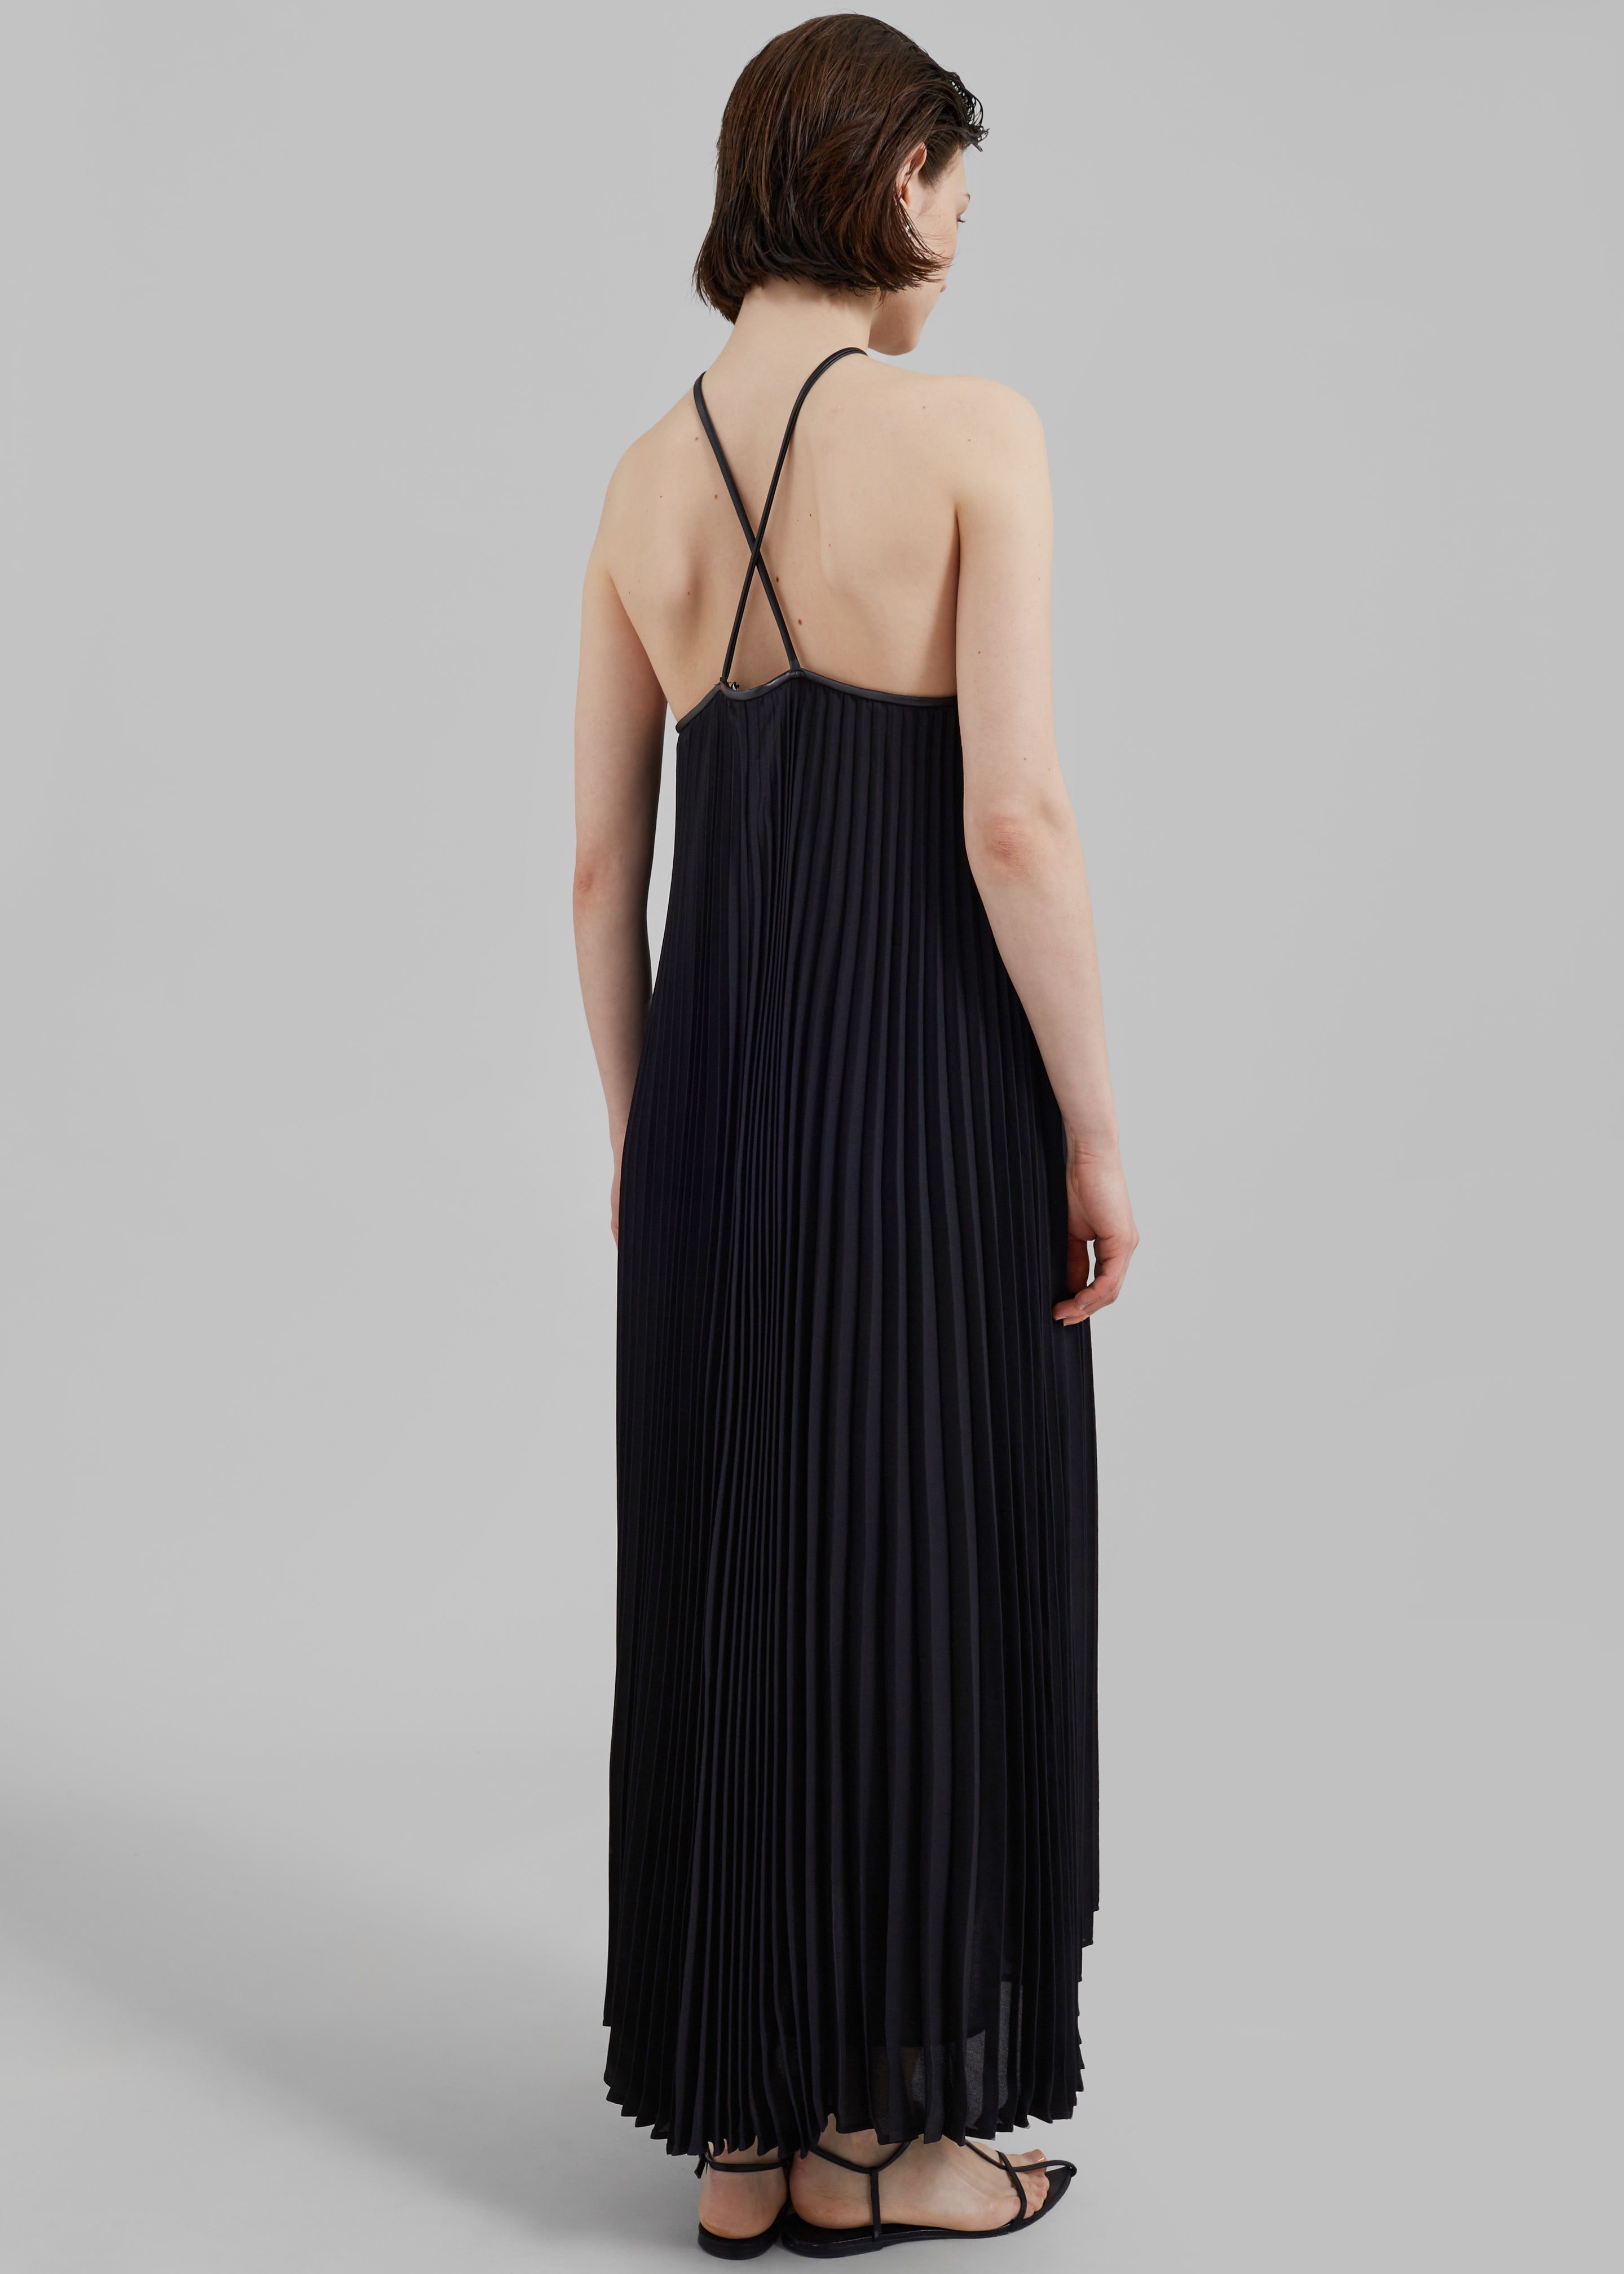 Proenza Schouler White Label Celeste Lightweight Crepe Dress  - Black - 7